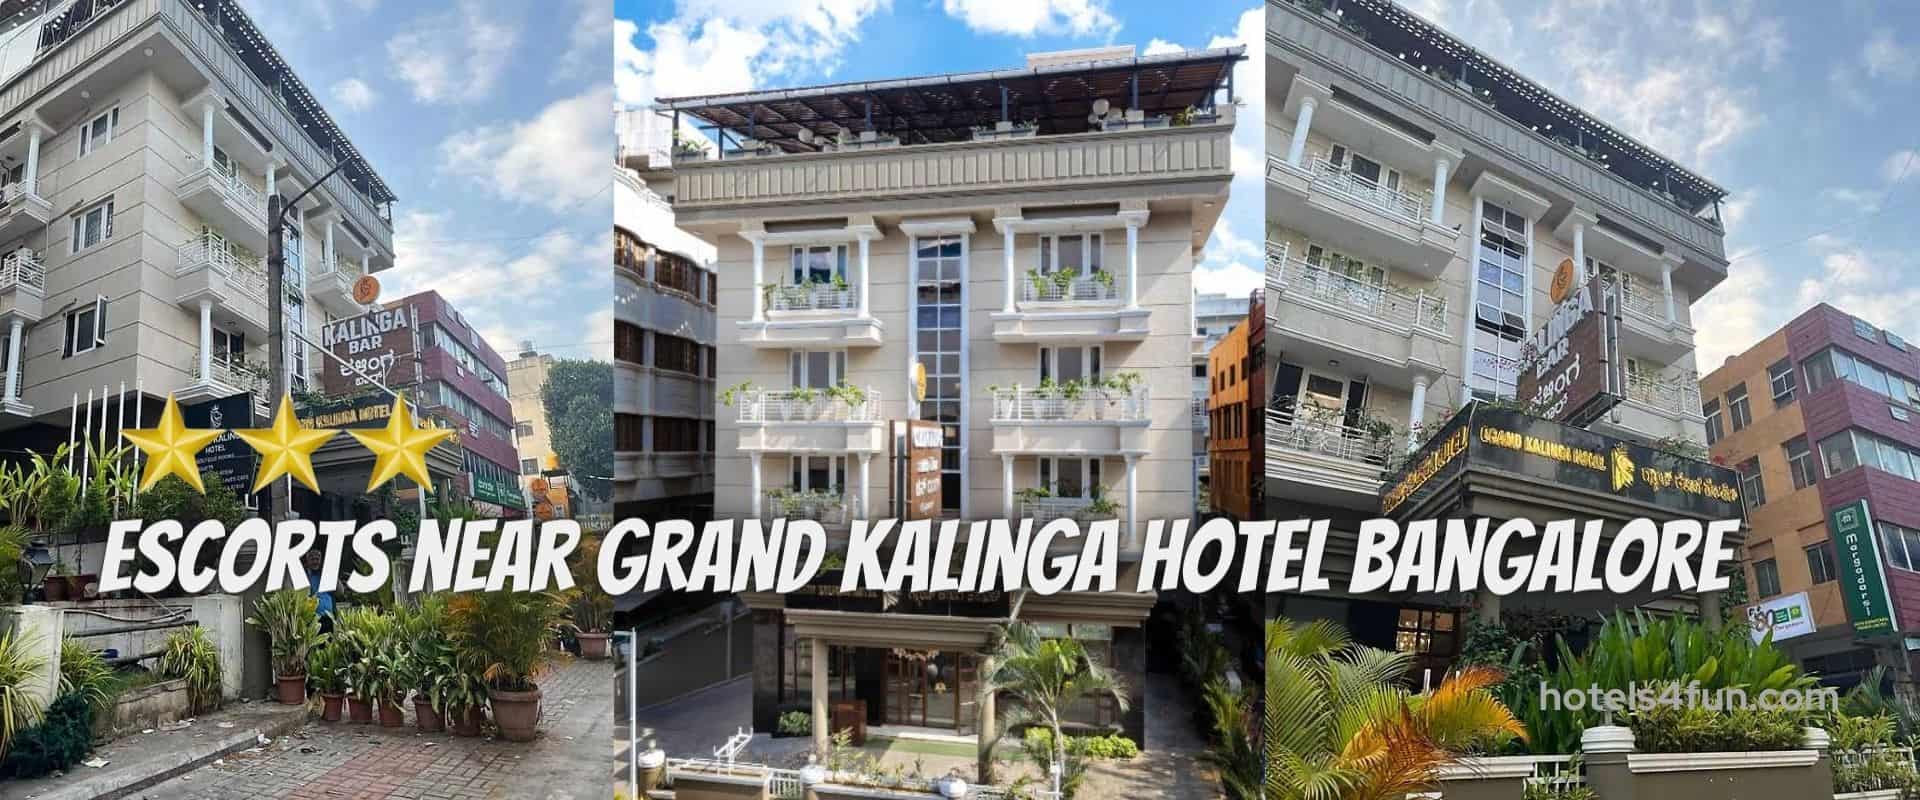 Grand Kalinga Hotel Bangalore